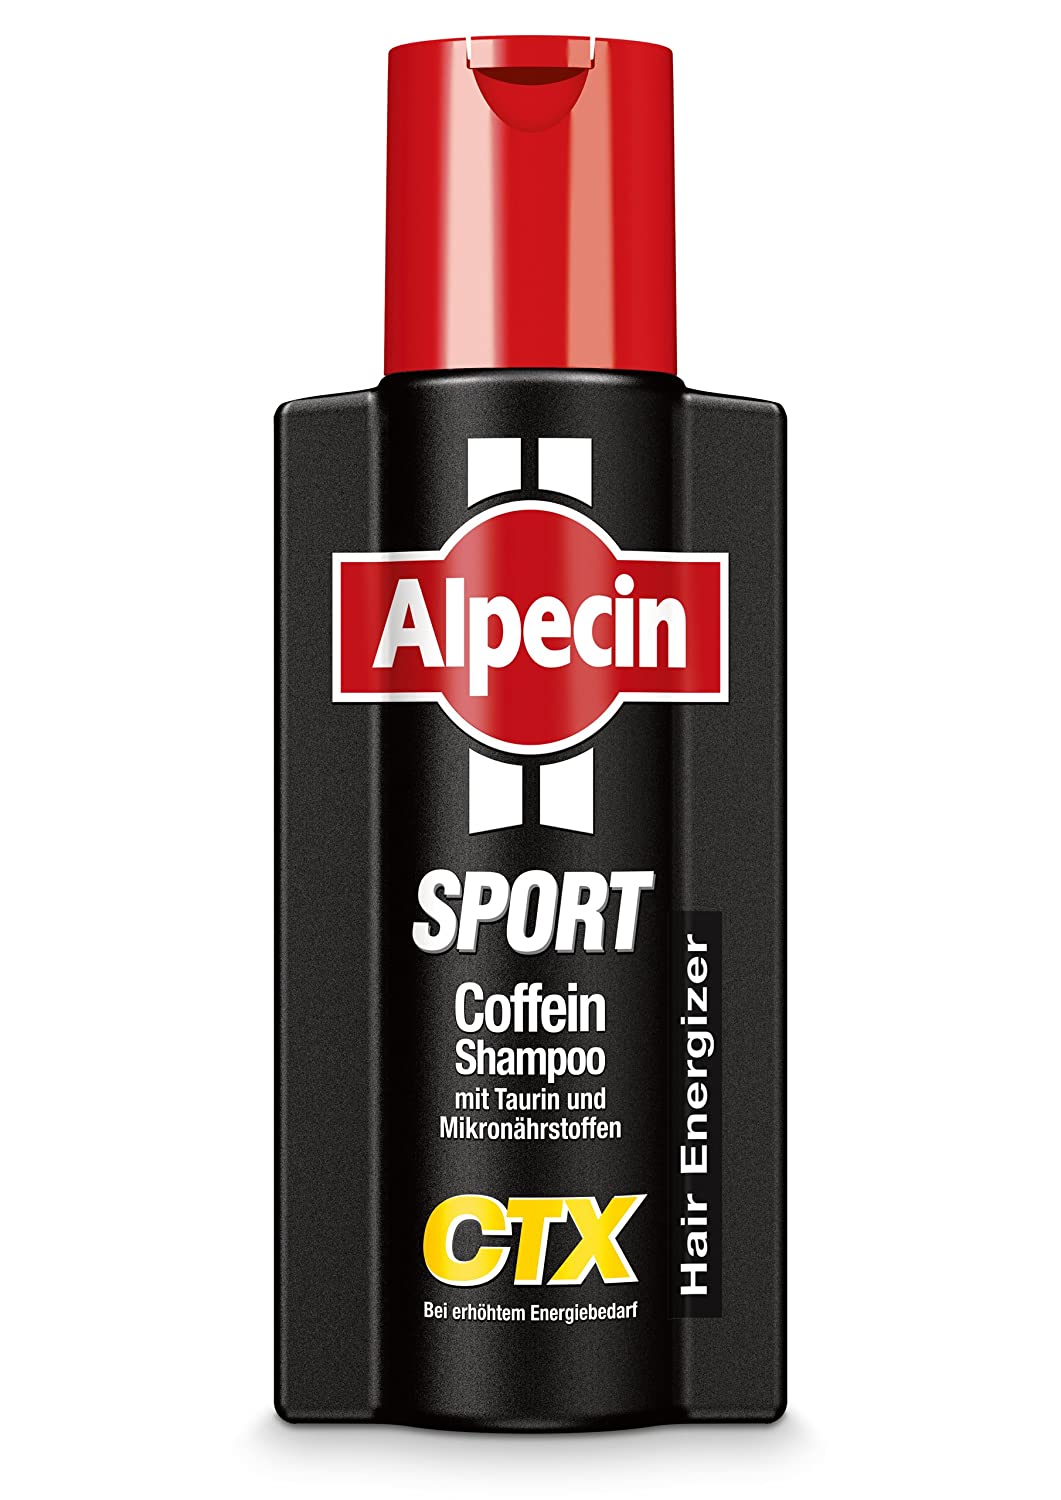 Alpecin Sport Caffeine Shampoo